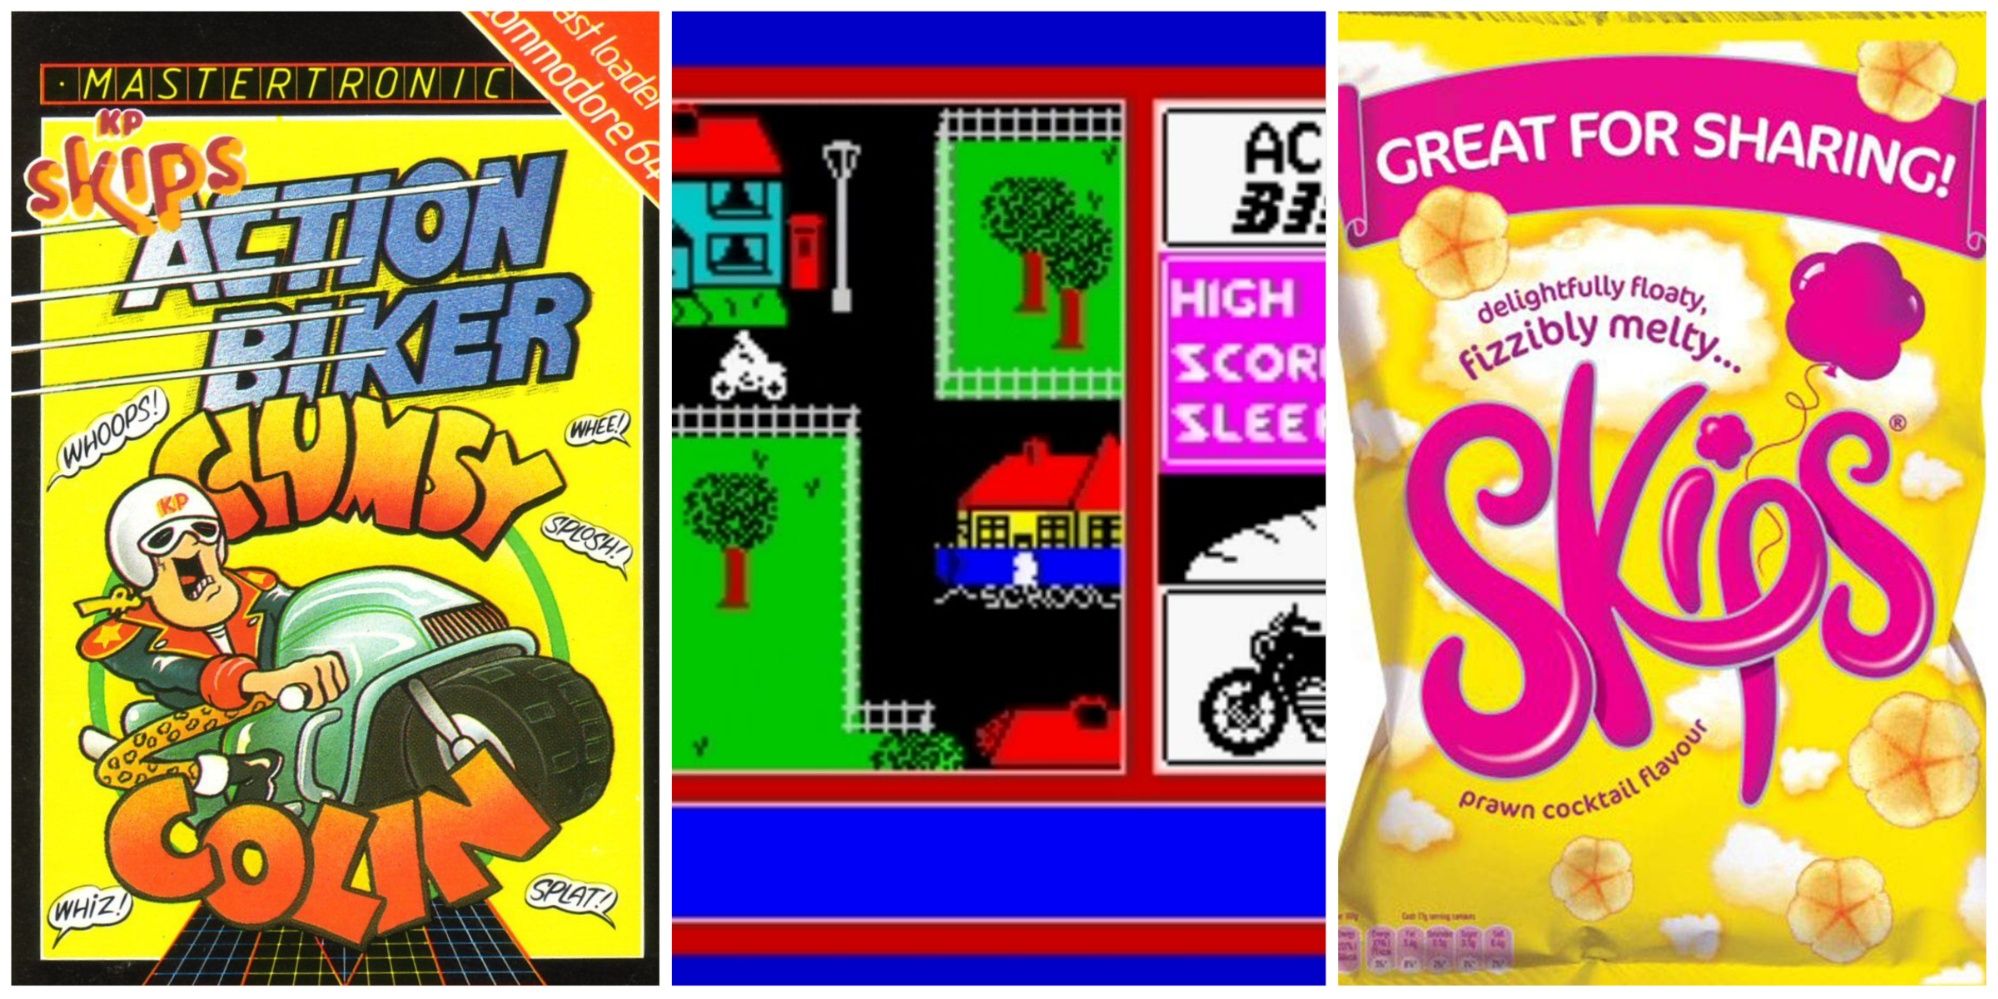 Action Biker Box Art, Action Biker ZX Spectrum Gameplay, A Packet of Skips